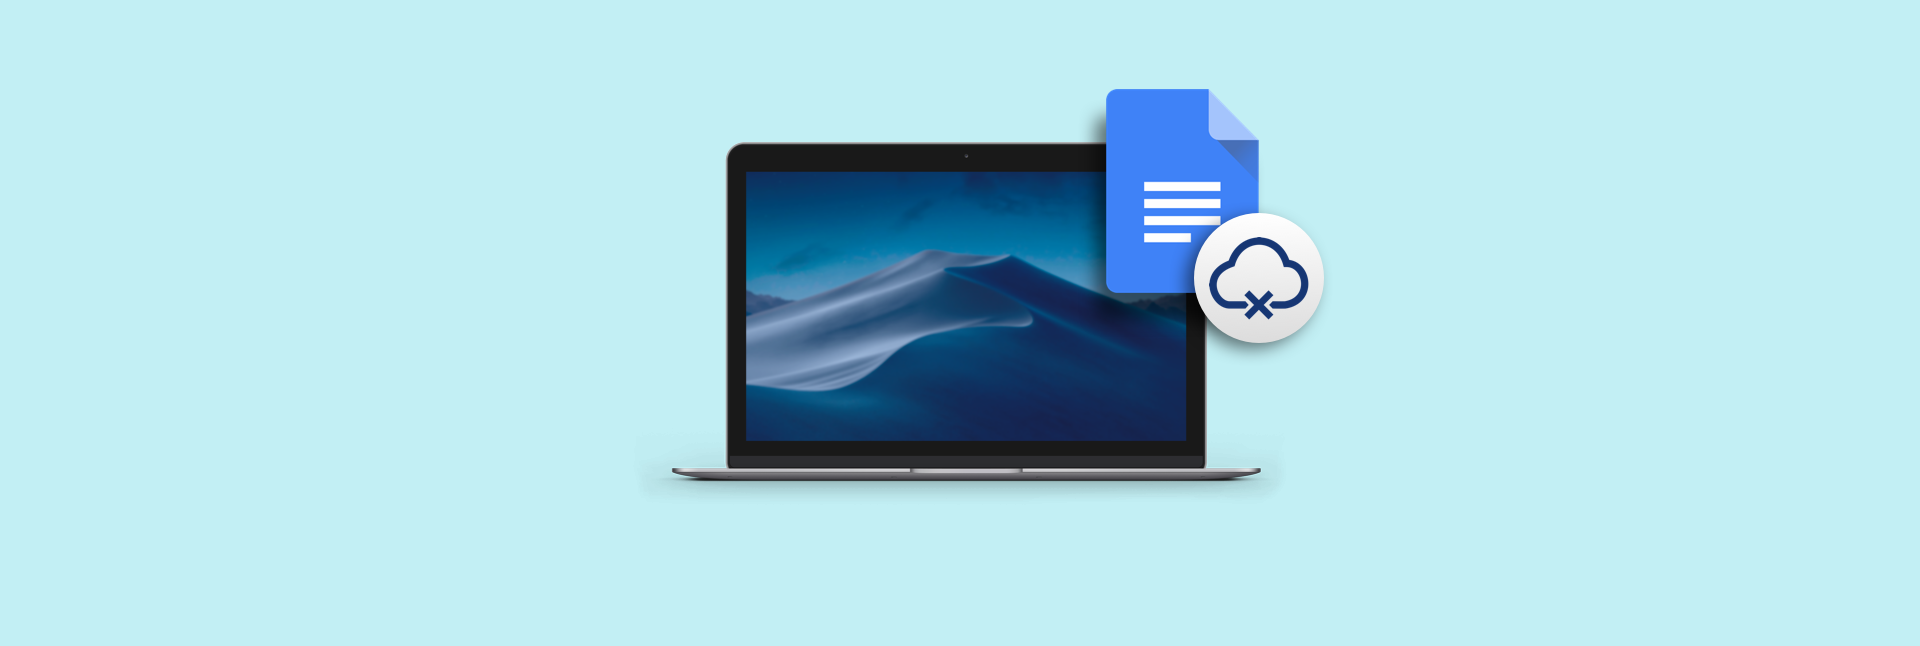 download google doc suite for mac